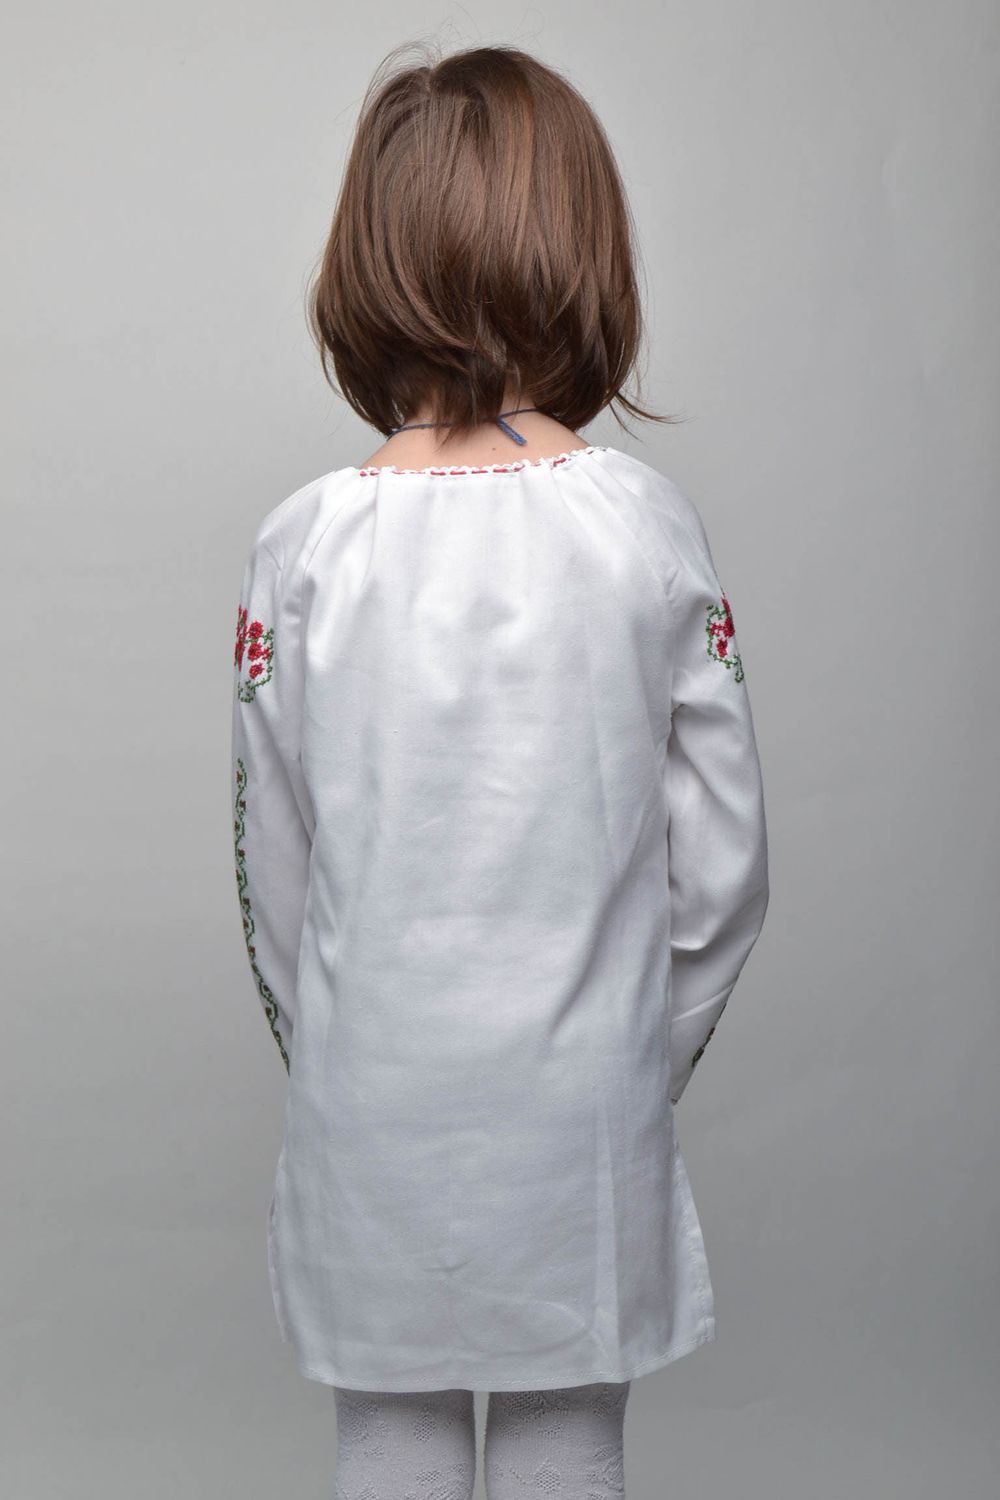 Camisa bordada de mangas largas para niña foto 4